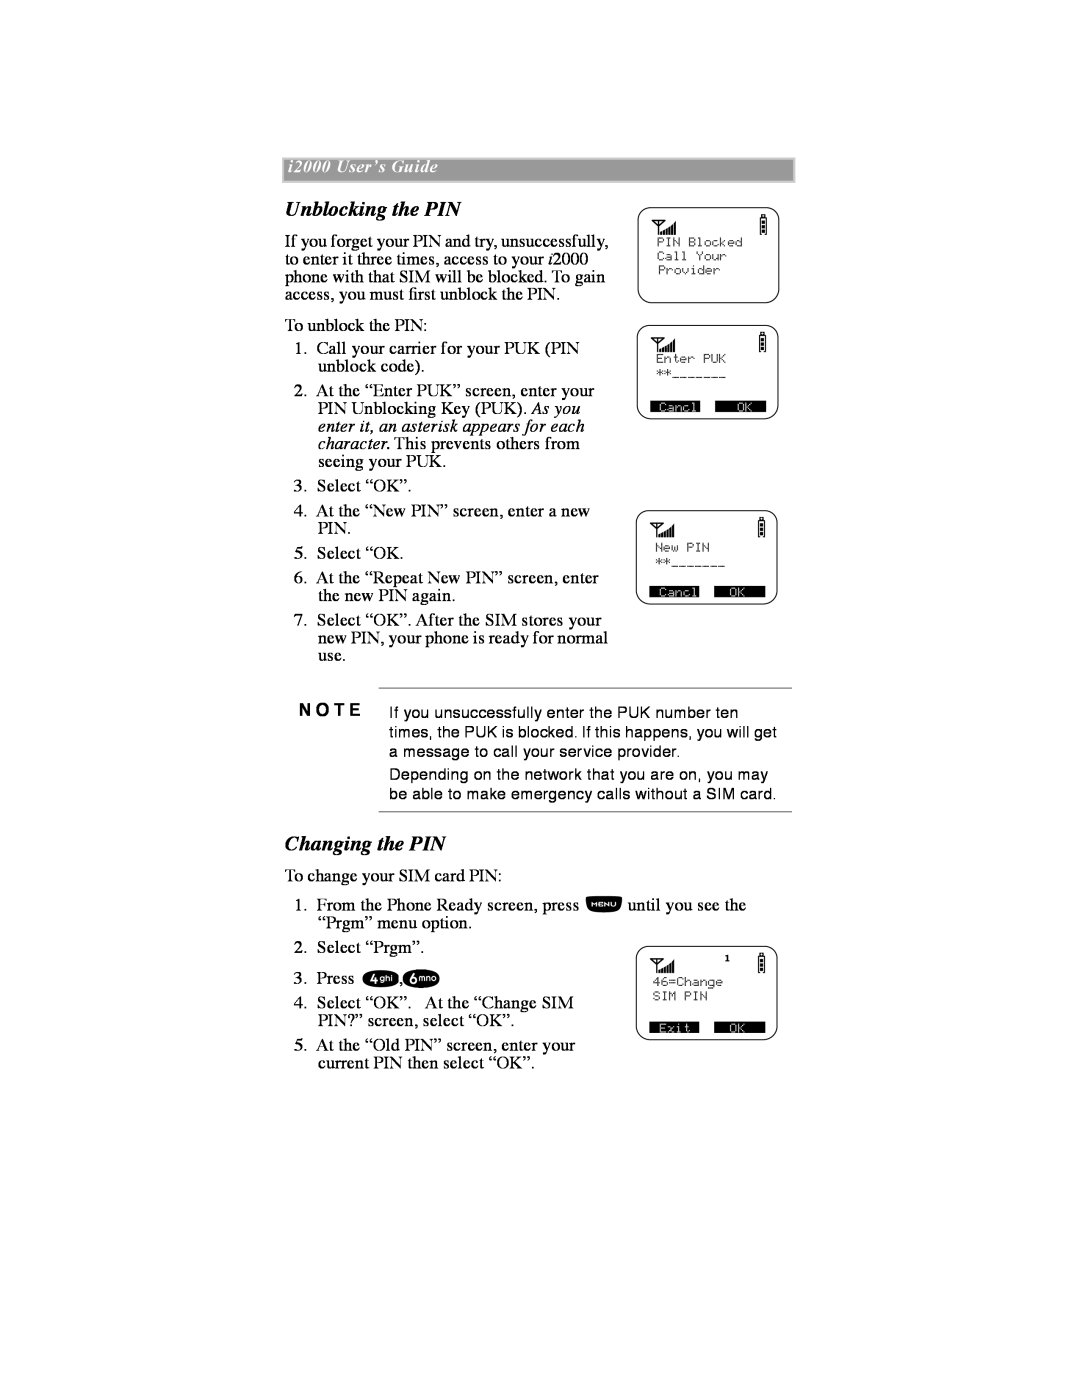 Motorola iDEN manual Unblocking the PIN, Changing the PIN, i2000 UserÕs Guide, N O T E 